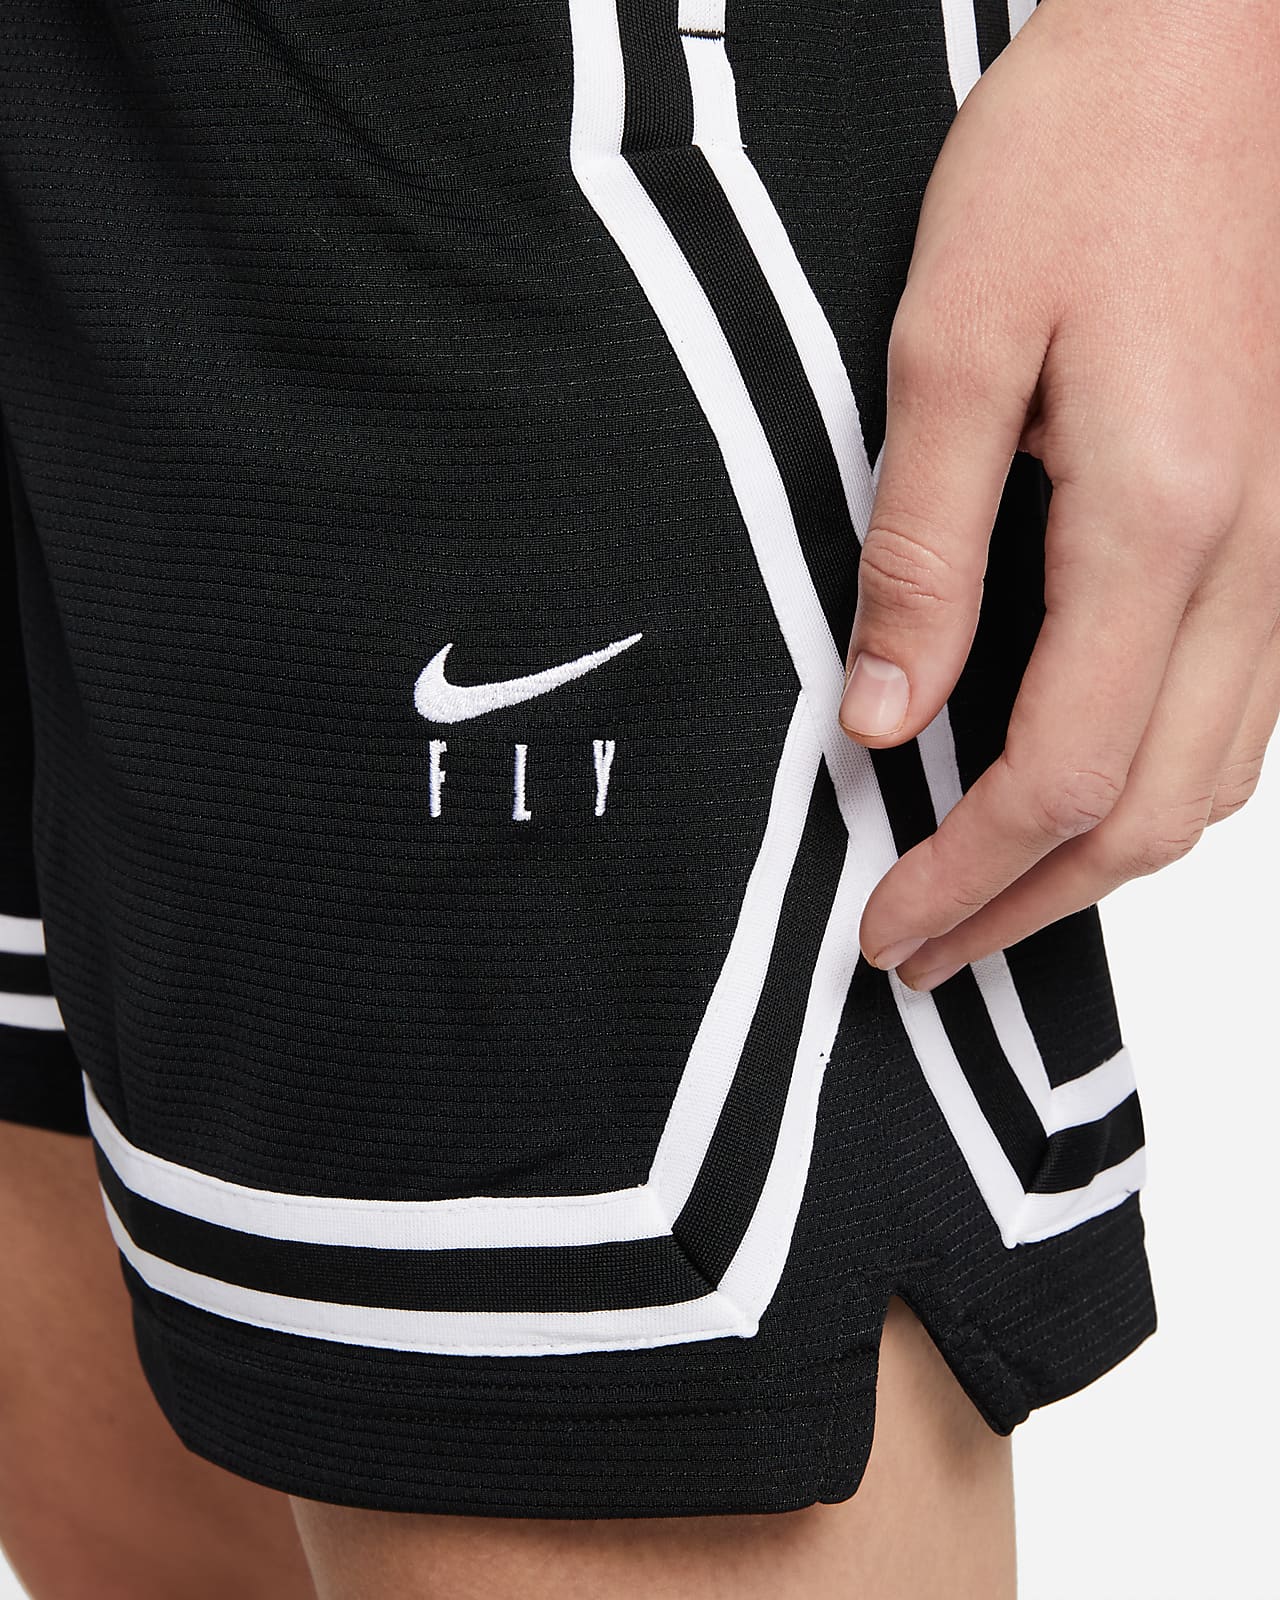 Nike Fly Crossover Women's Basketball Shorts. Nike SK